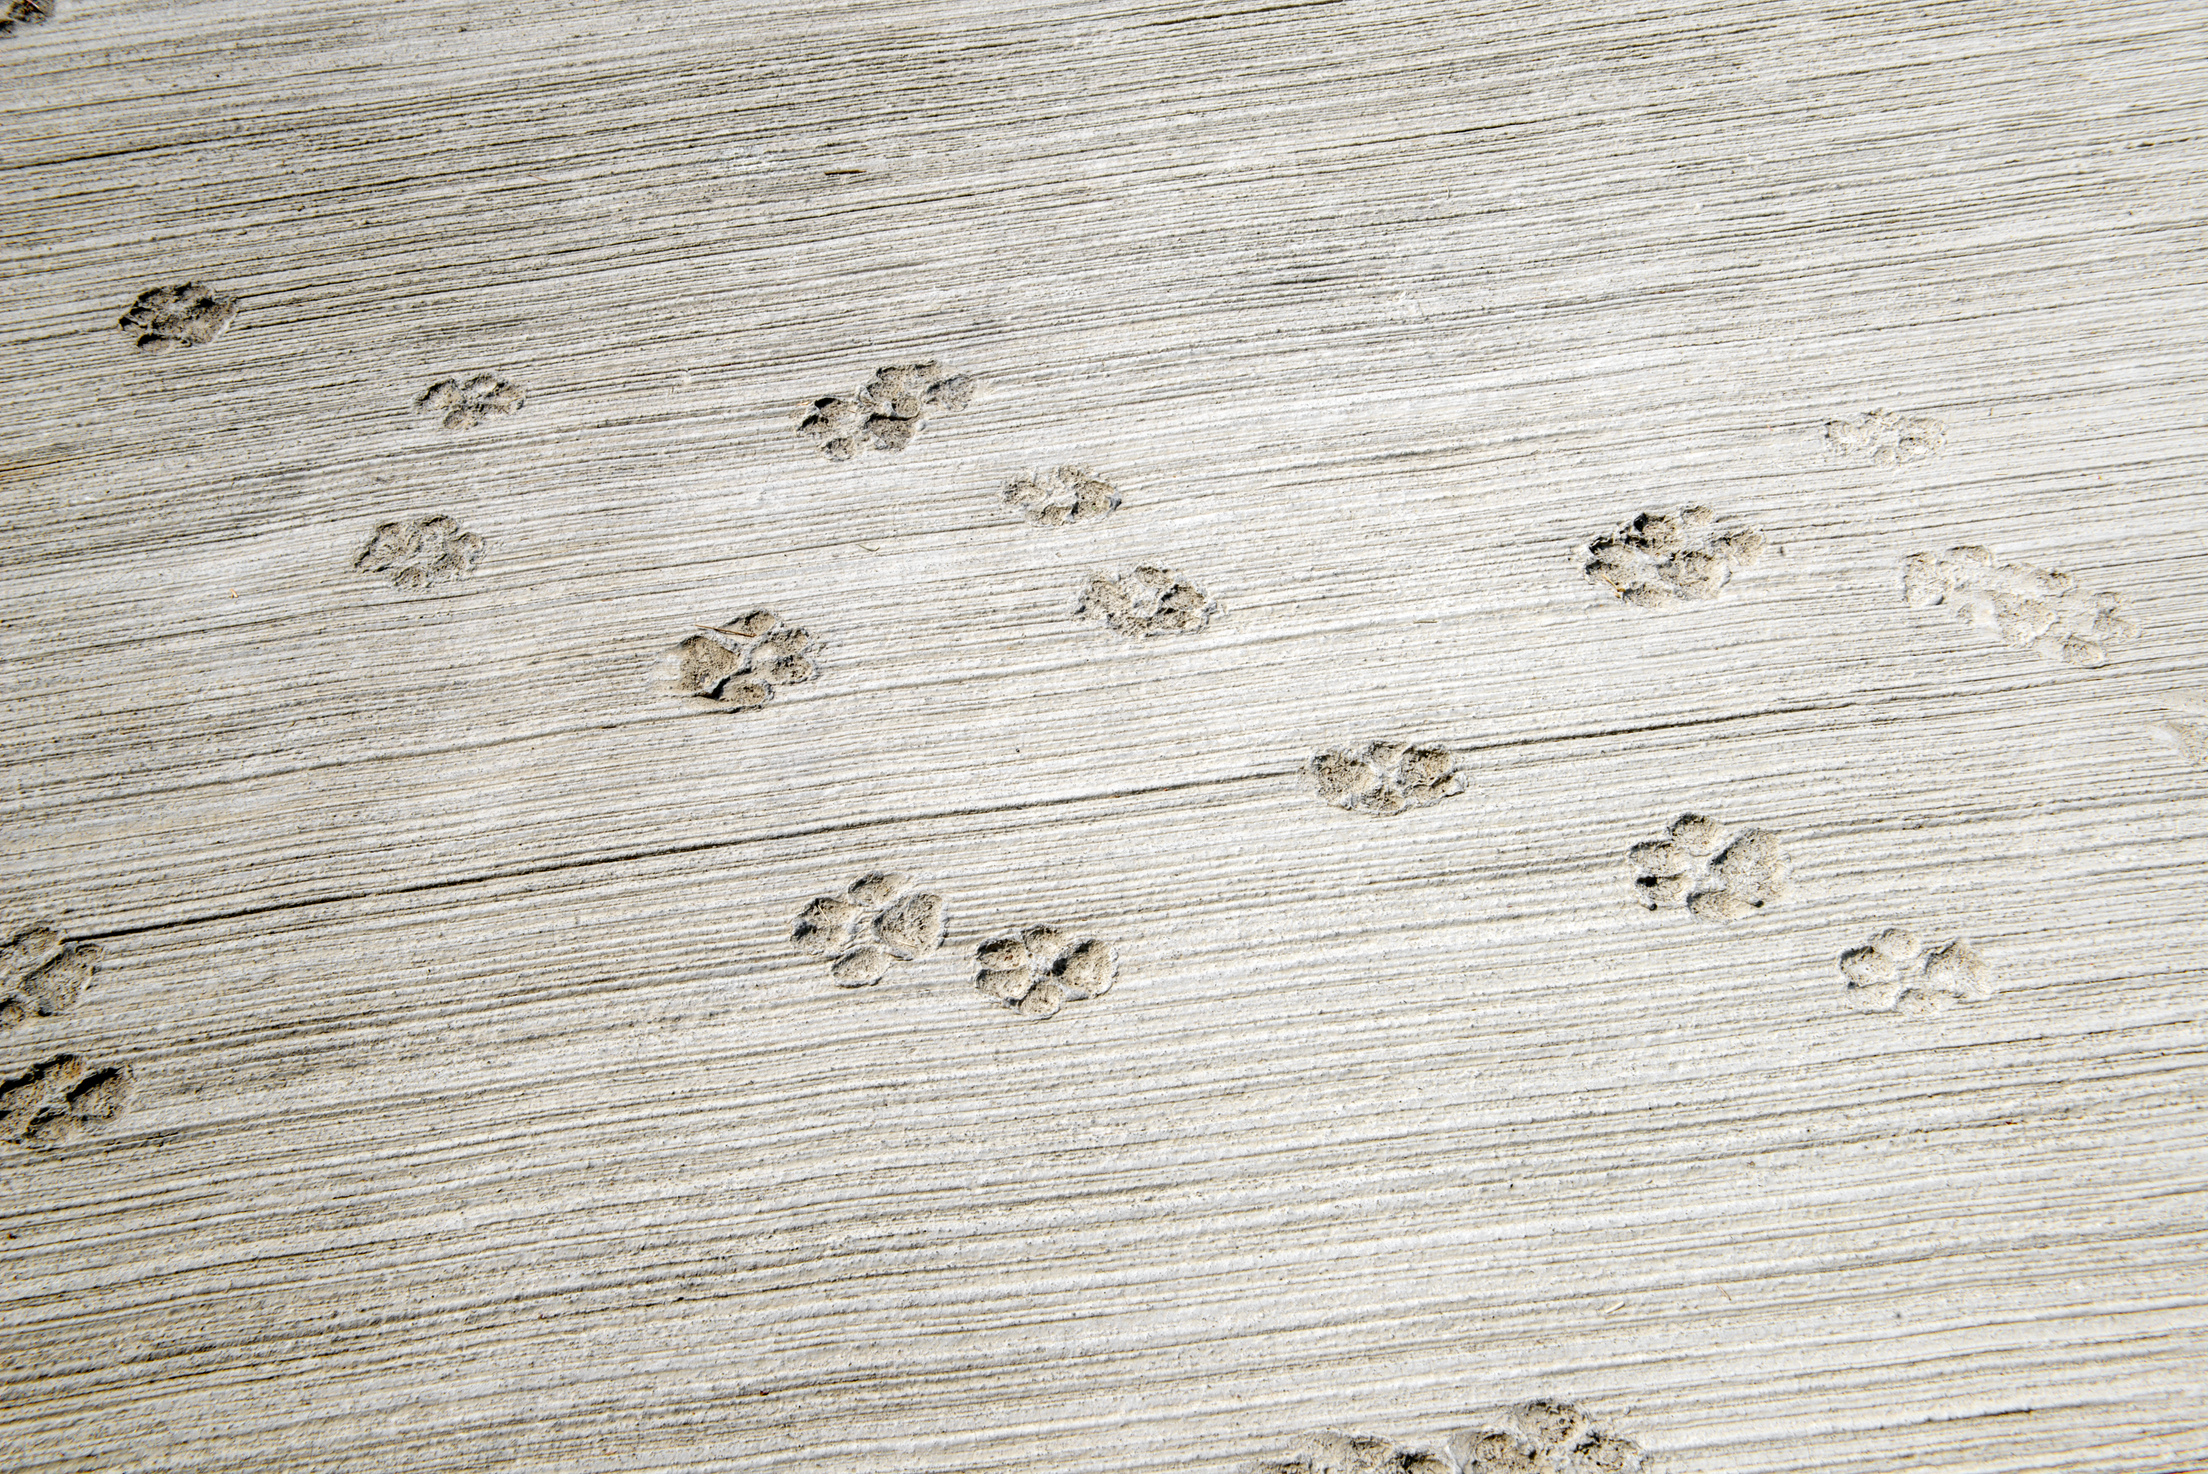 close up of dog paw print